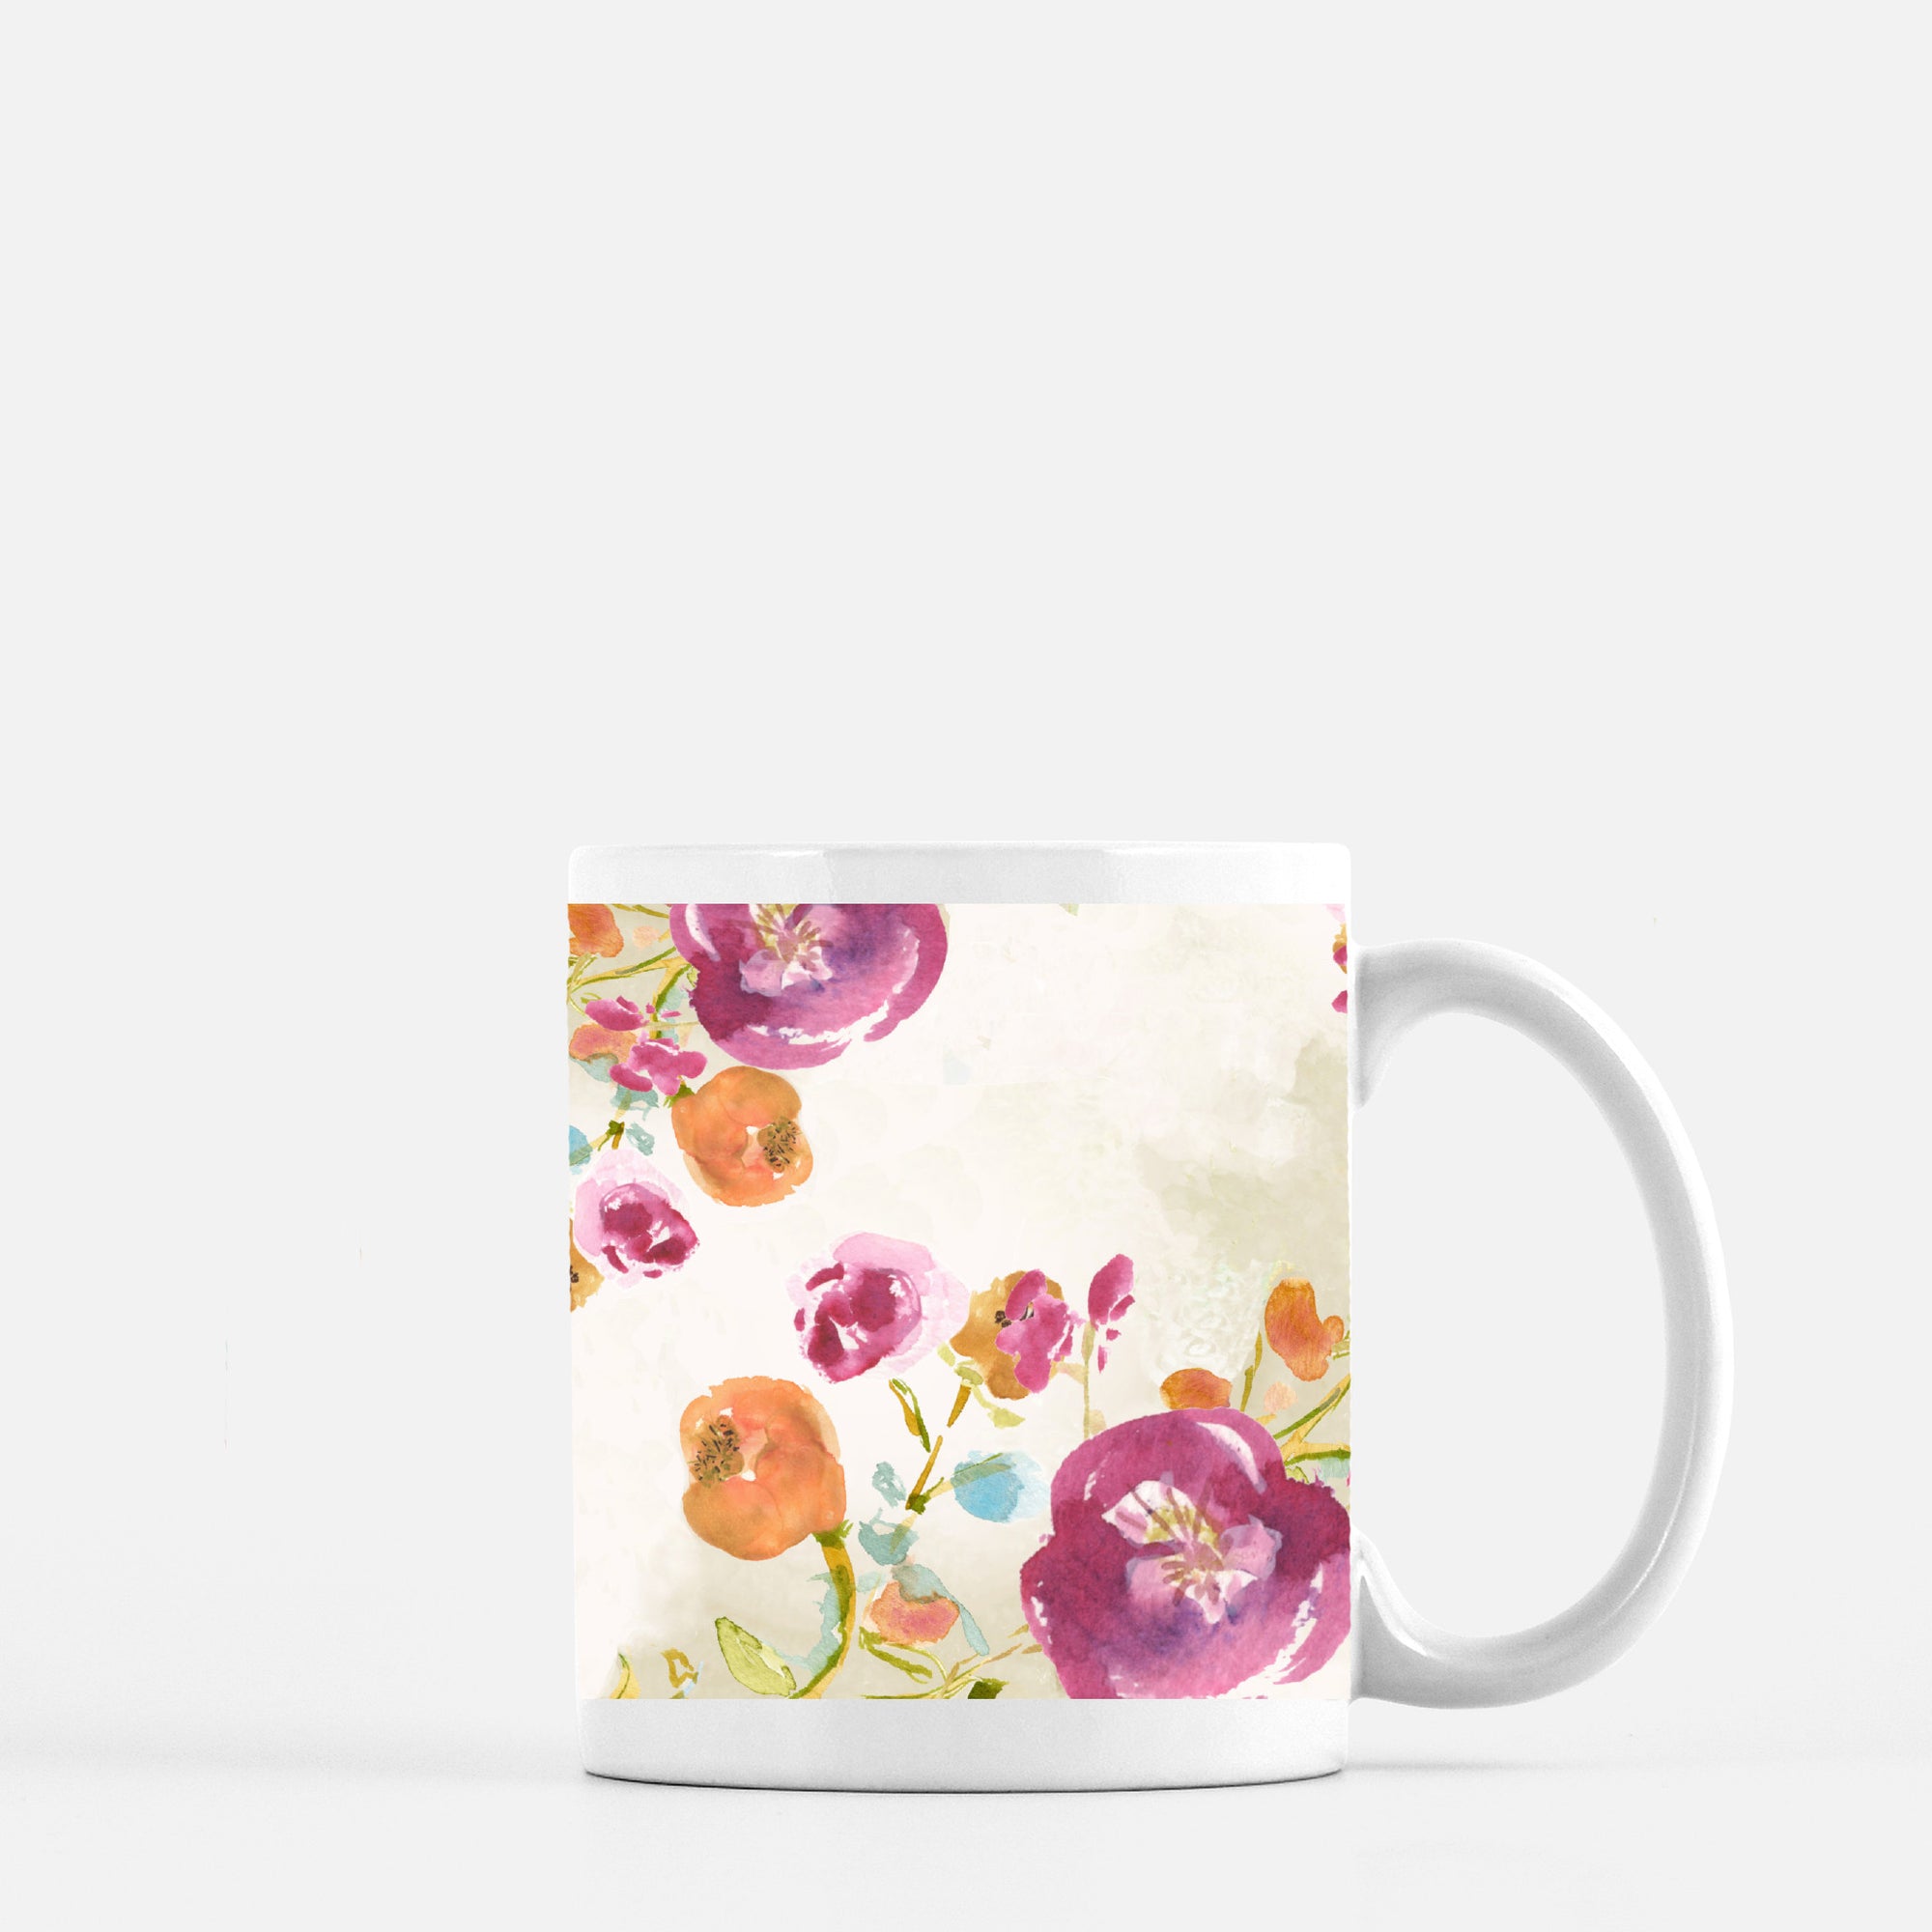 Oh Carolina Floral Ceramic Mug - Dreams After All